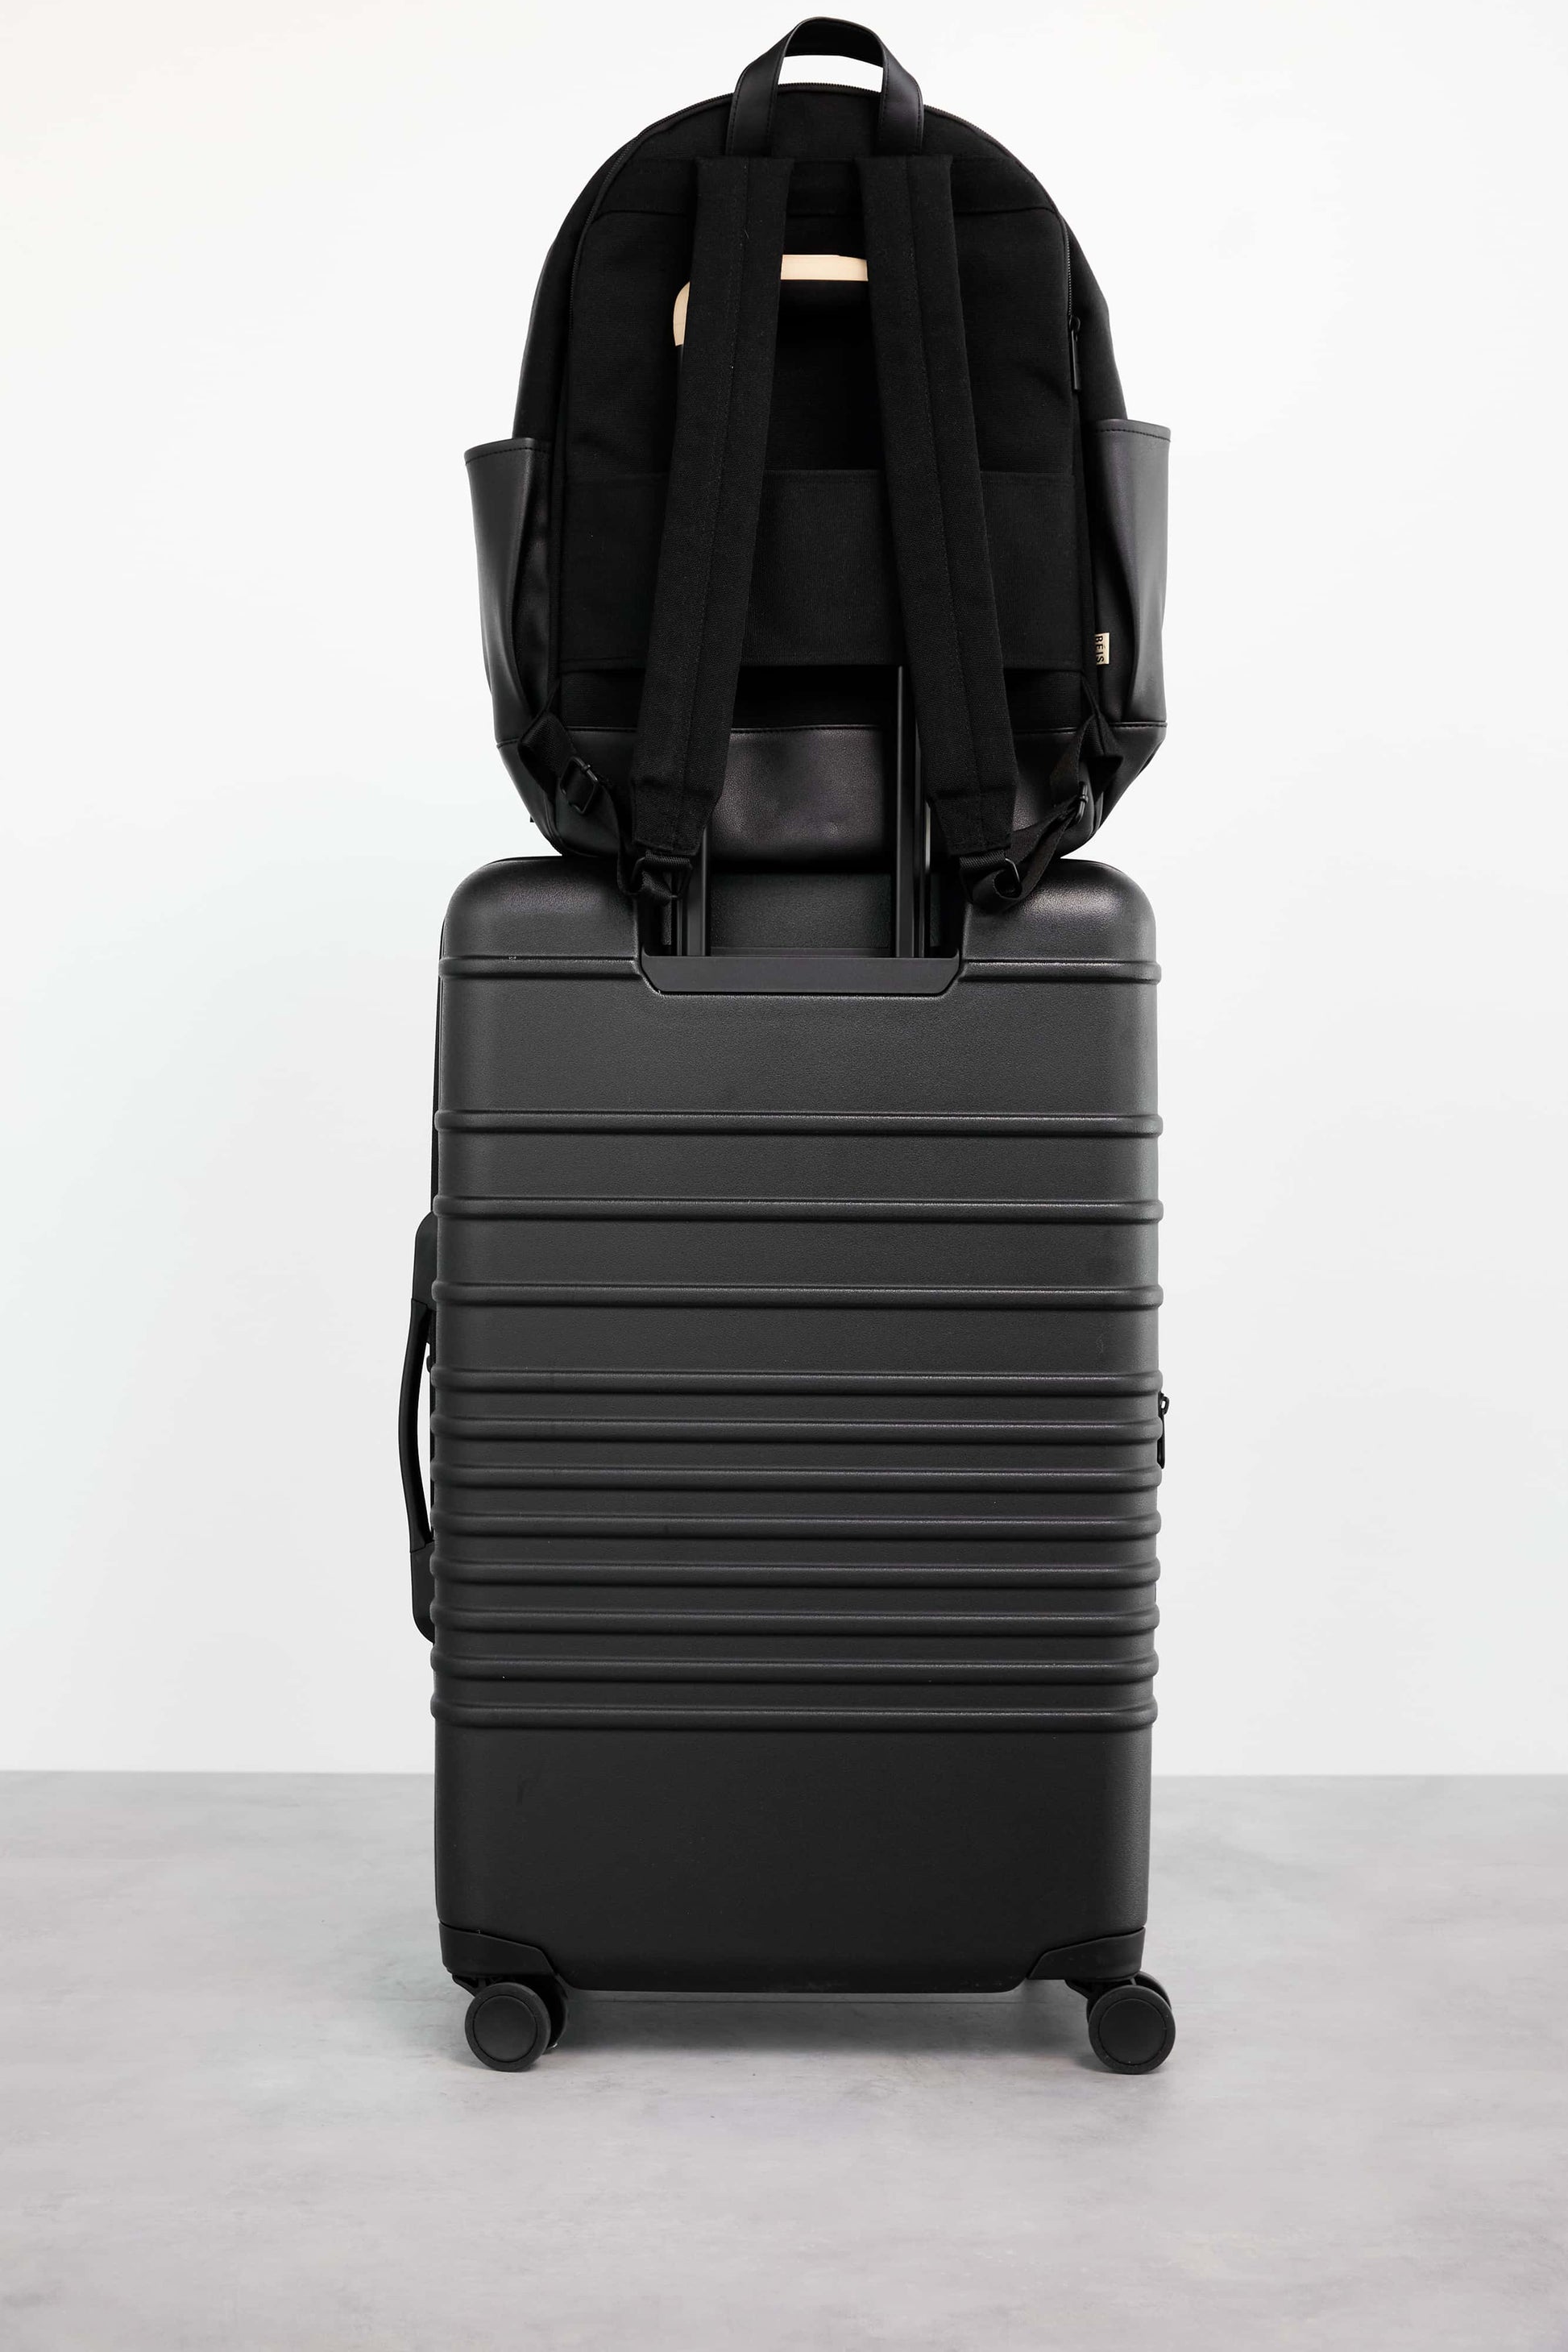 Backpack Black Back Trolley Sleeve